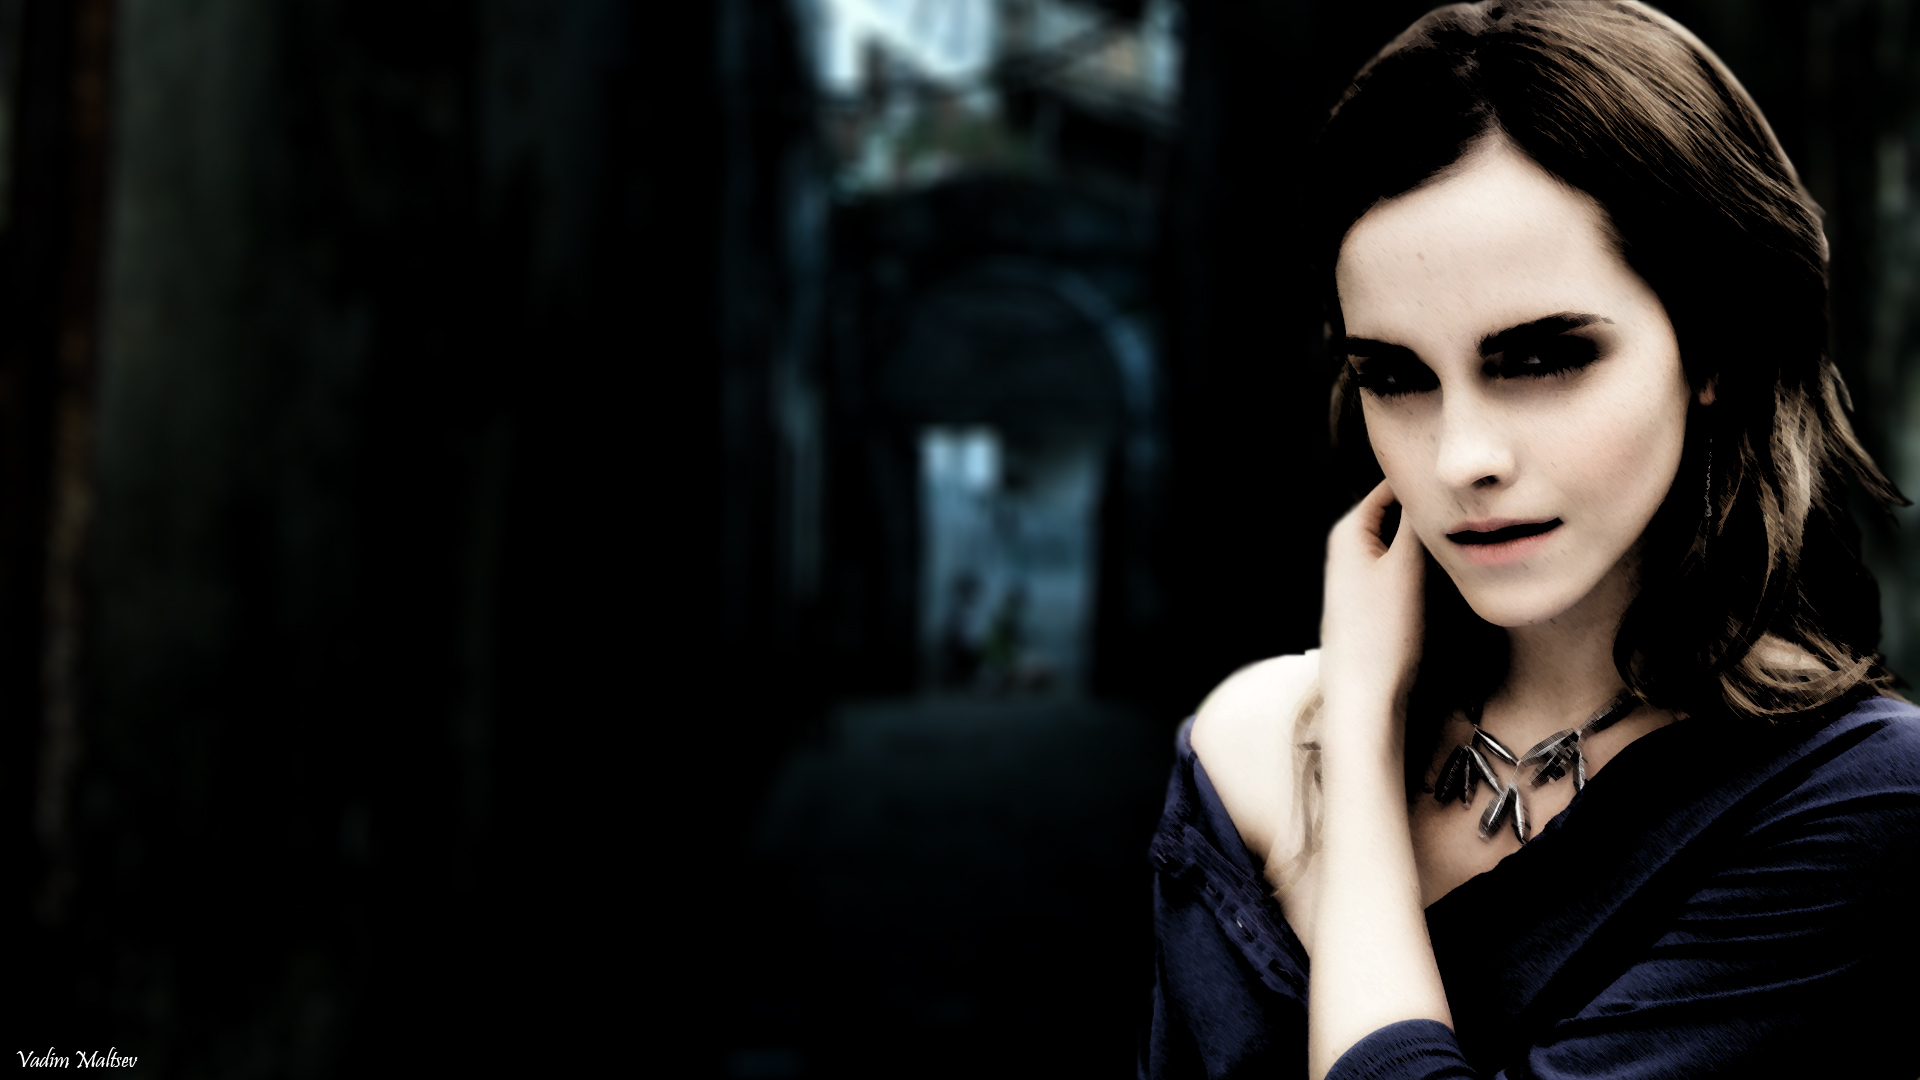 44+] Emma Watson Wallpaper 1920x1080 - WallpaperSafari